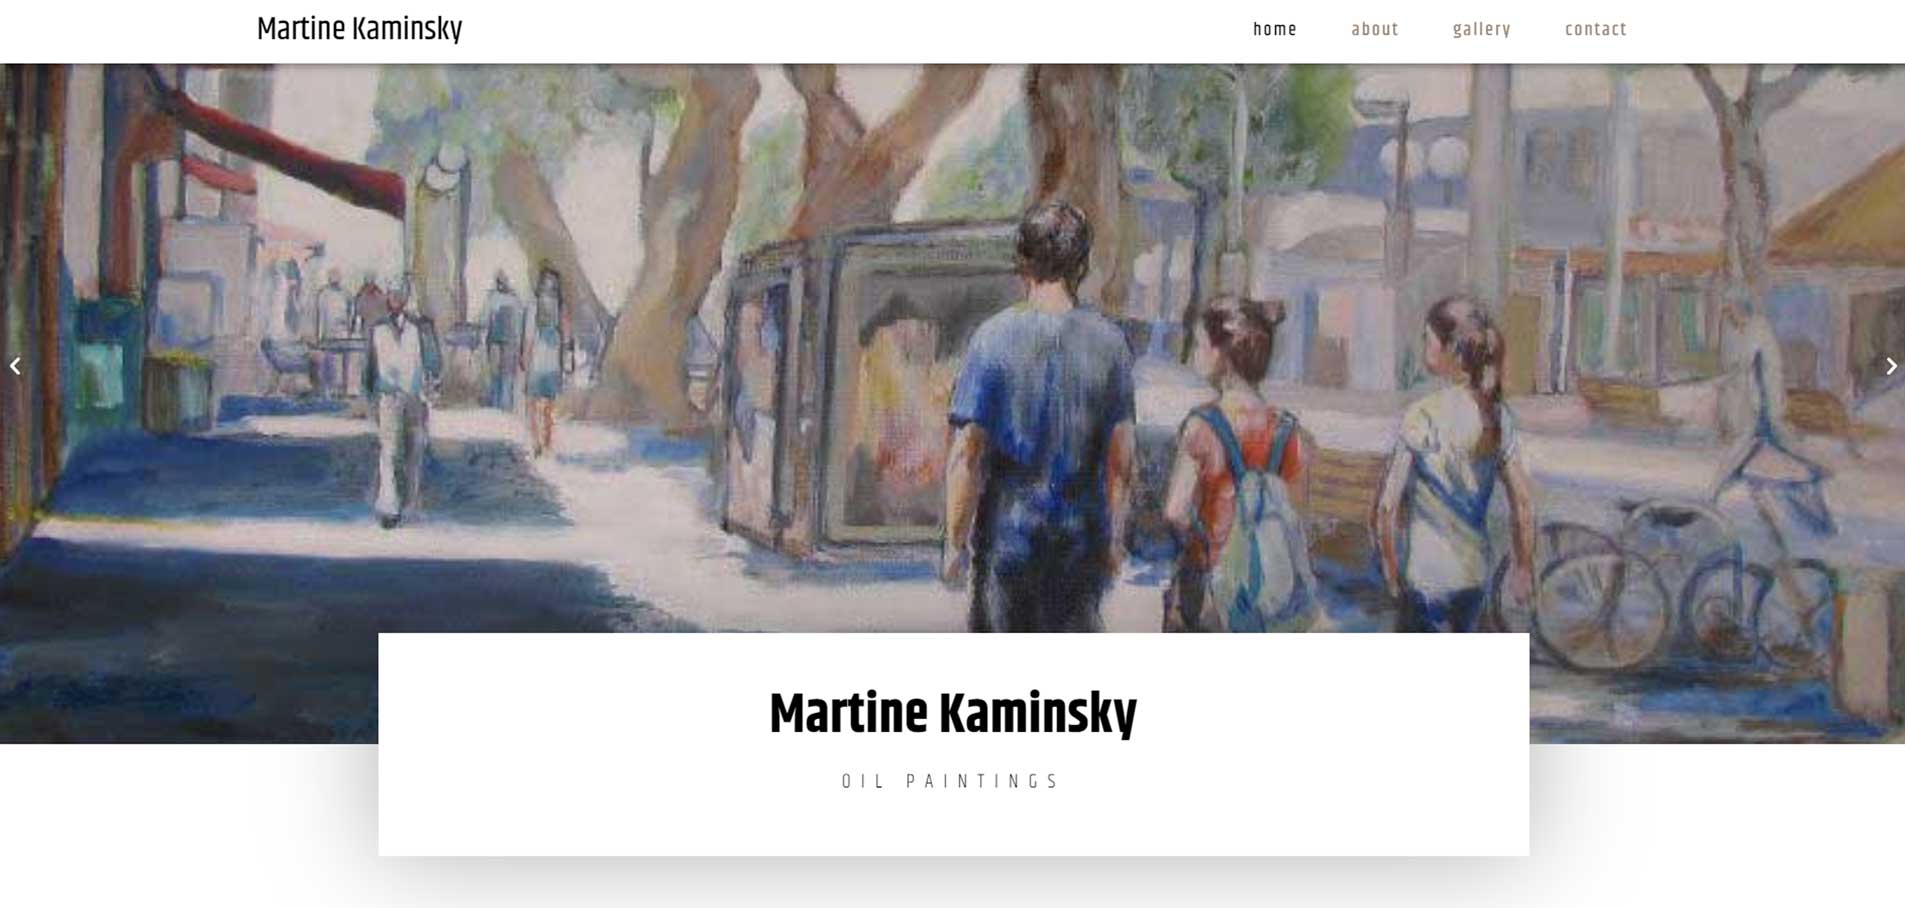 MARTINE KAMINSKY homepage